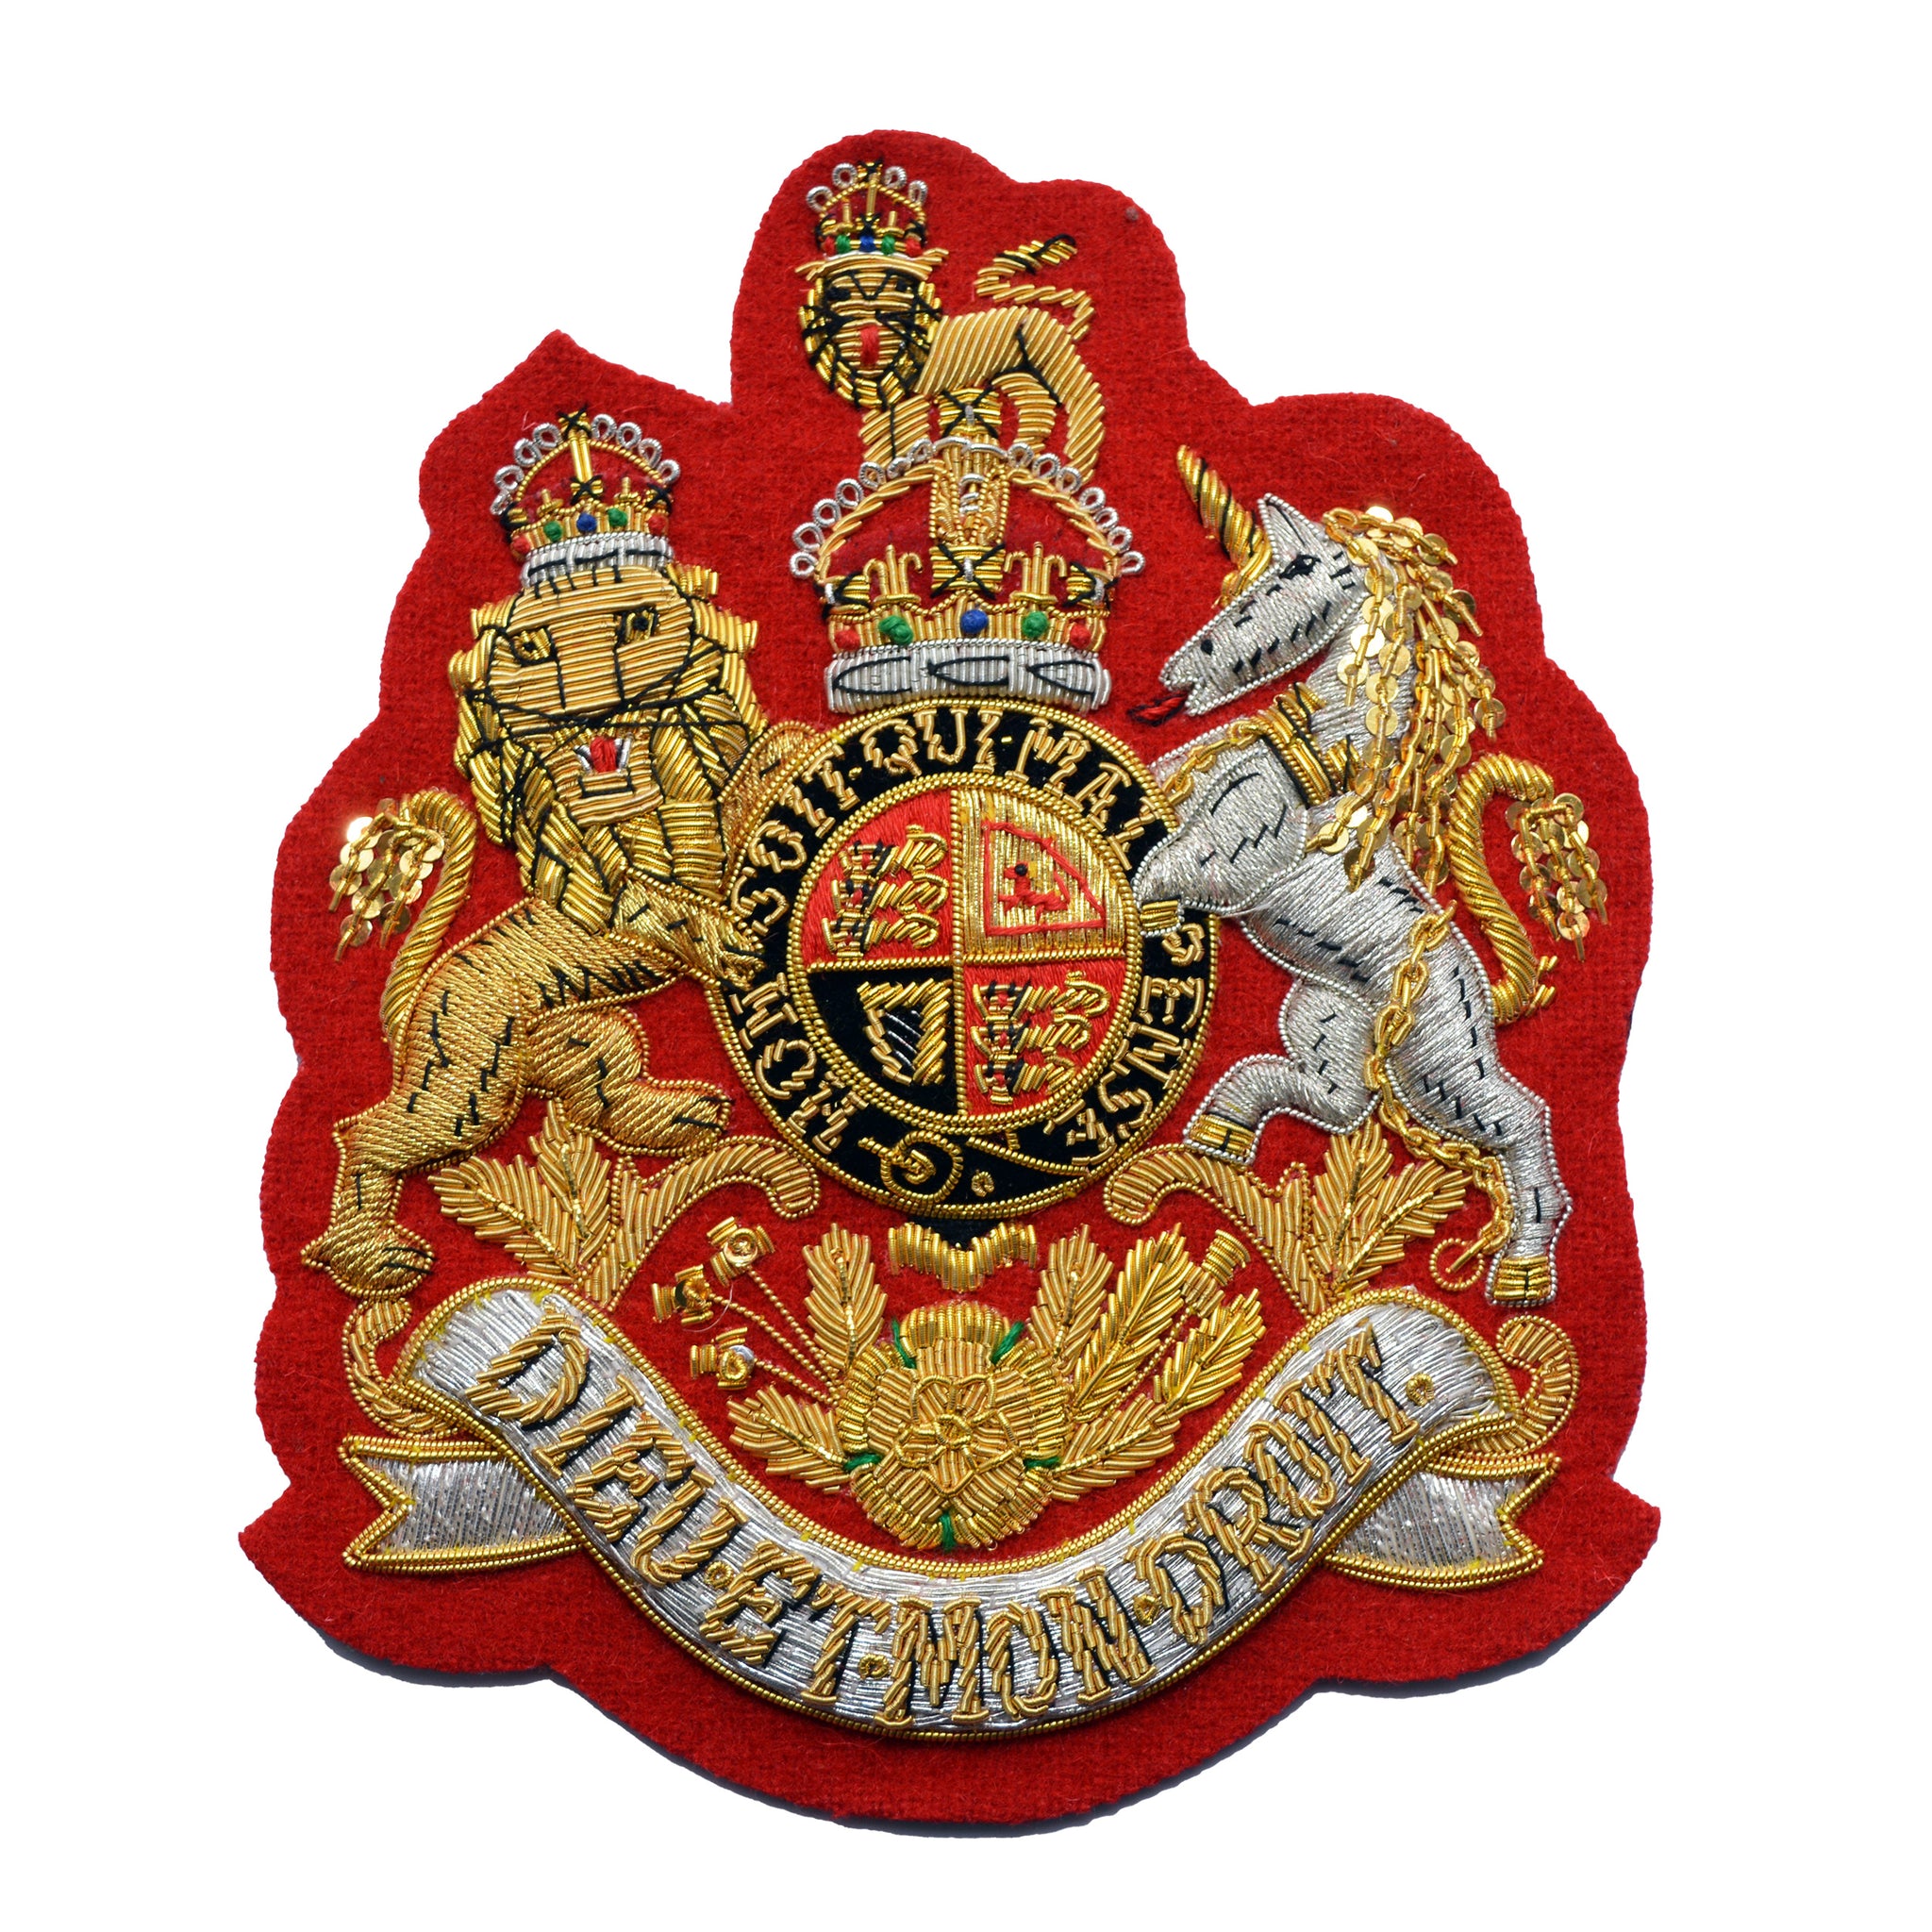 (King's Crown) Superintending Clerk and Regimental Sergeant Major (RSM) Foot Guards Large Royal Arms British Army Rank Badge